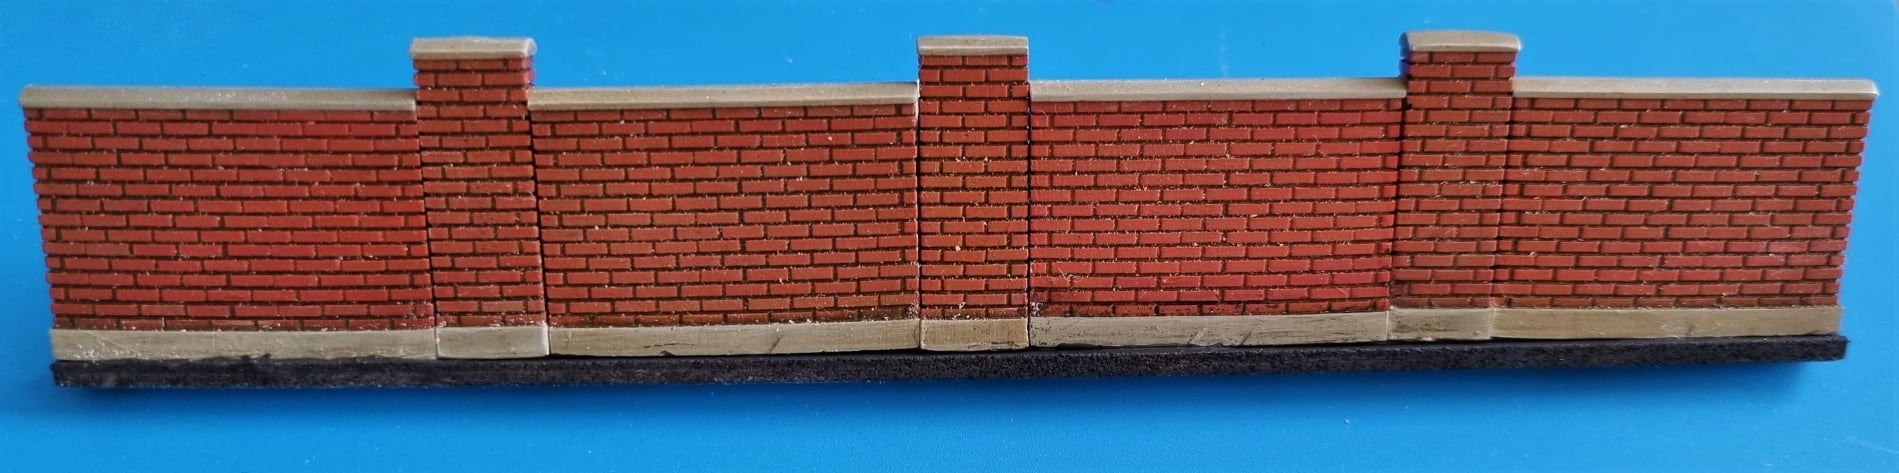 Brick wall (15cm)